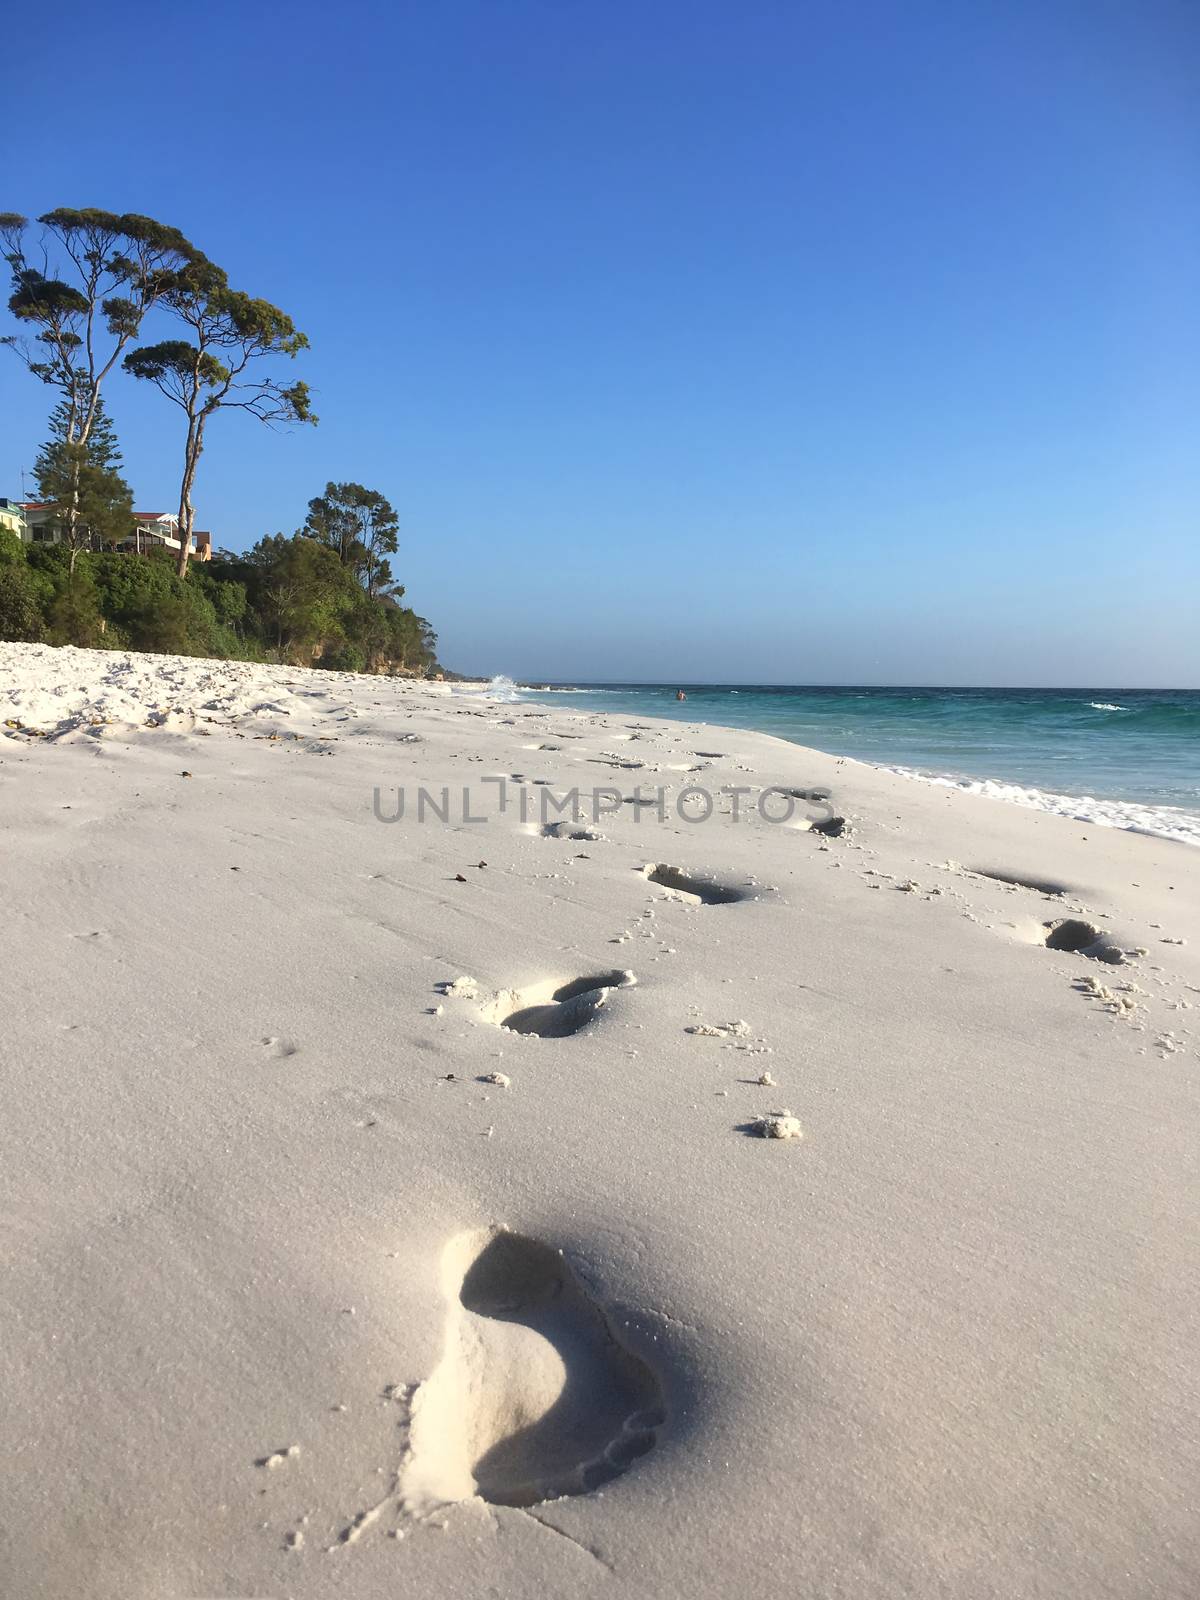 Footprints in wet sand on beach by lovleah